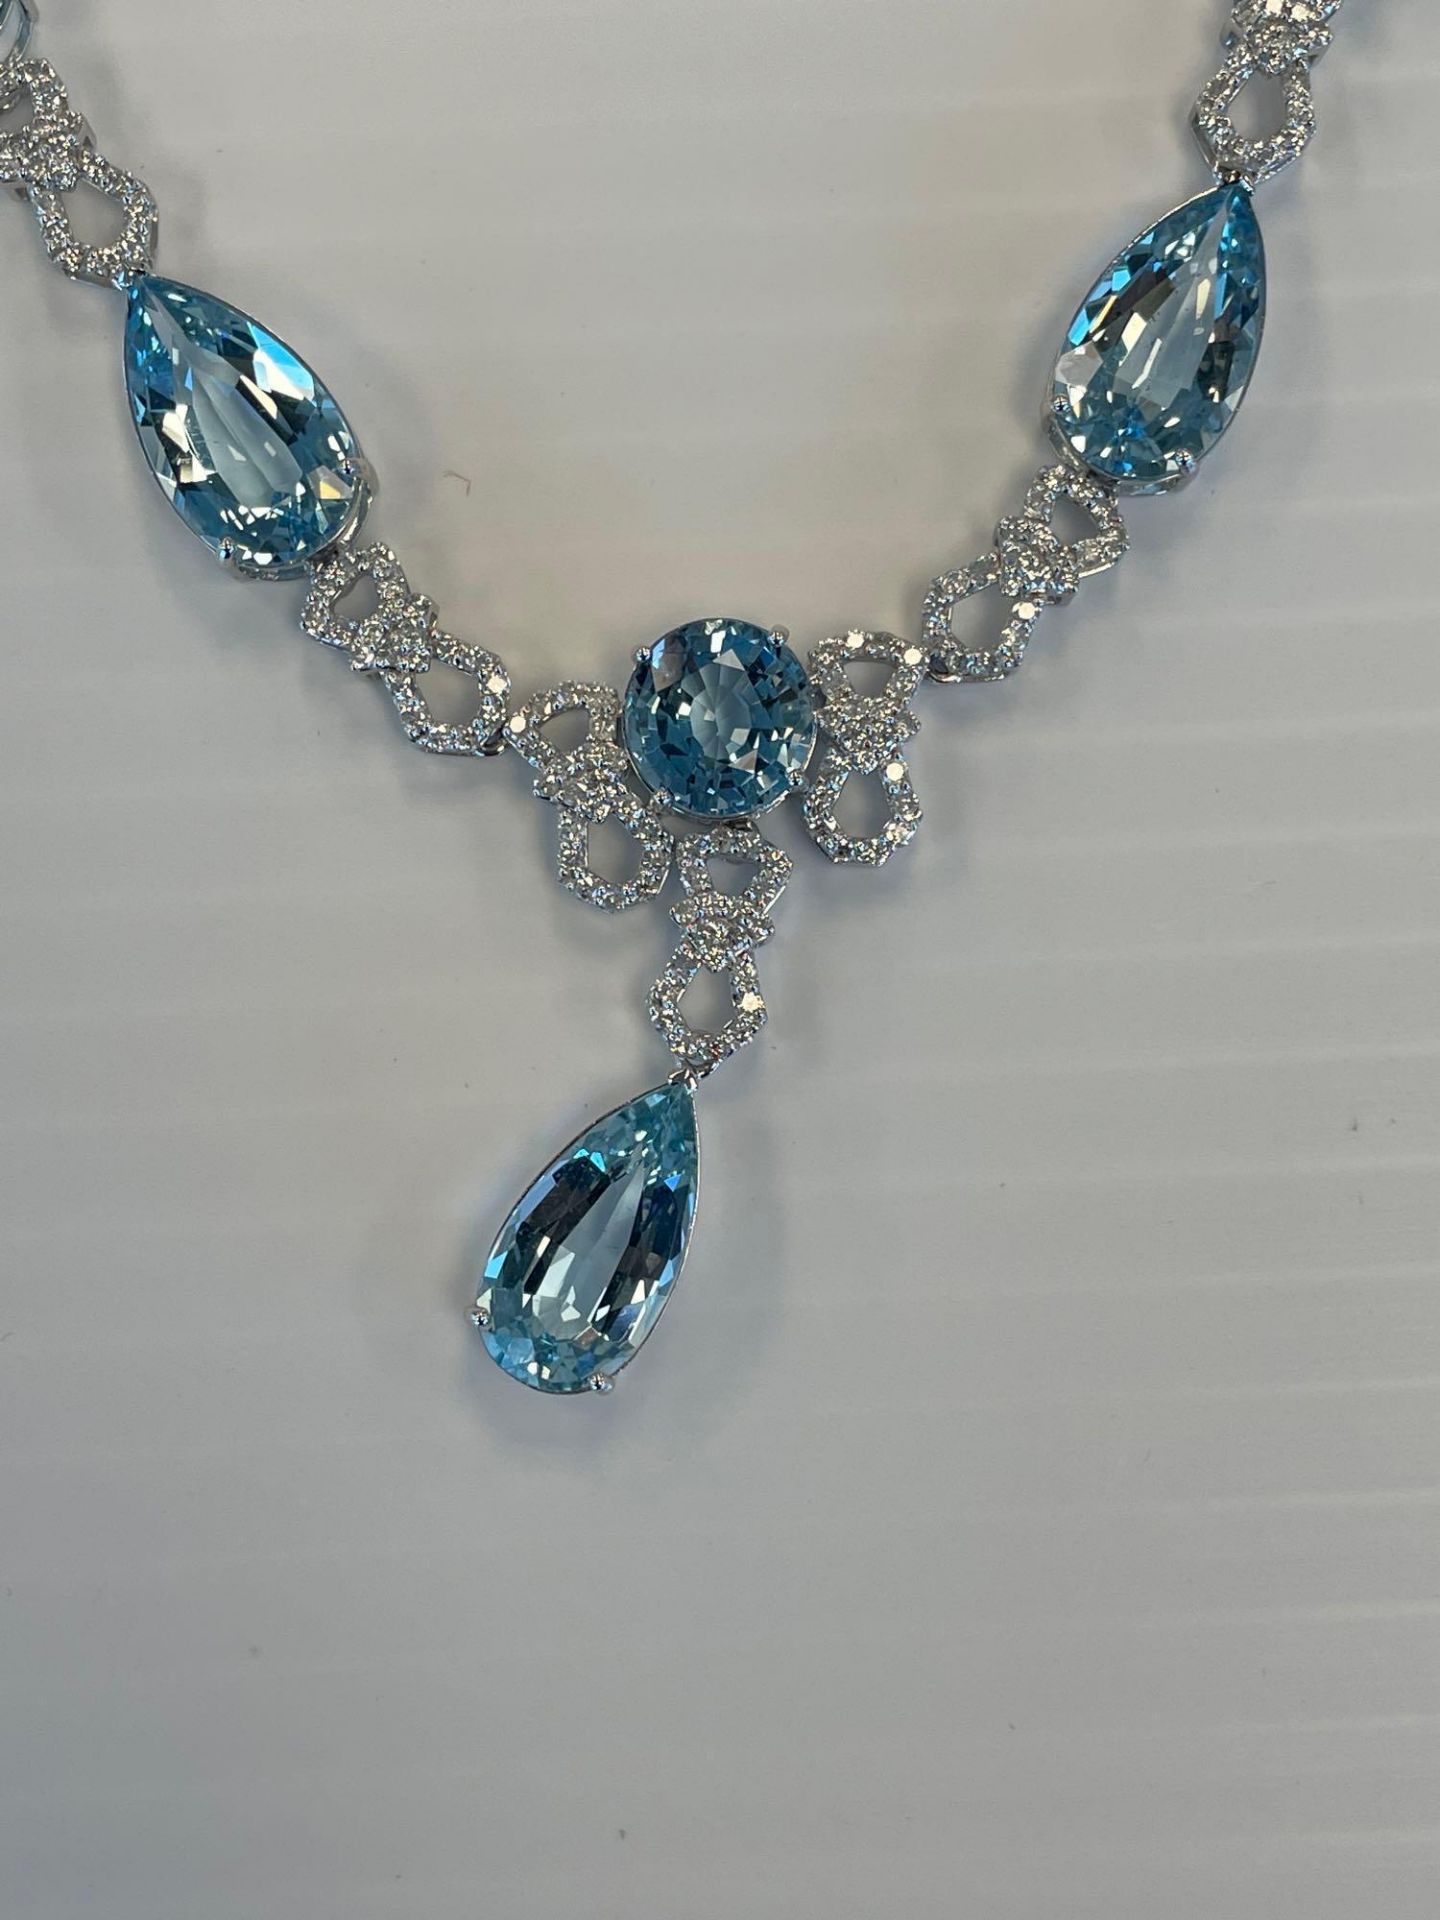 14kt white gold 37.99 ctw aquamarine beryl and 3.09 ctw diamond necklace - Image 2 of 7